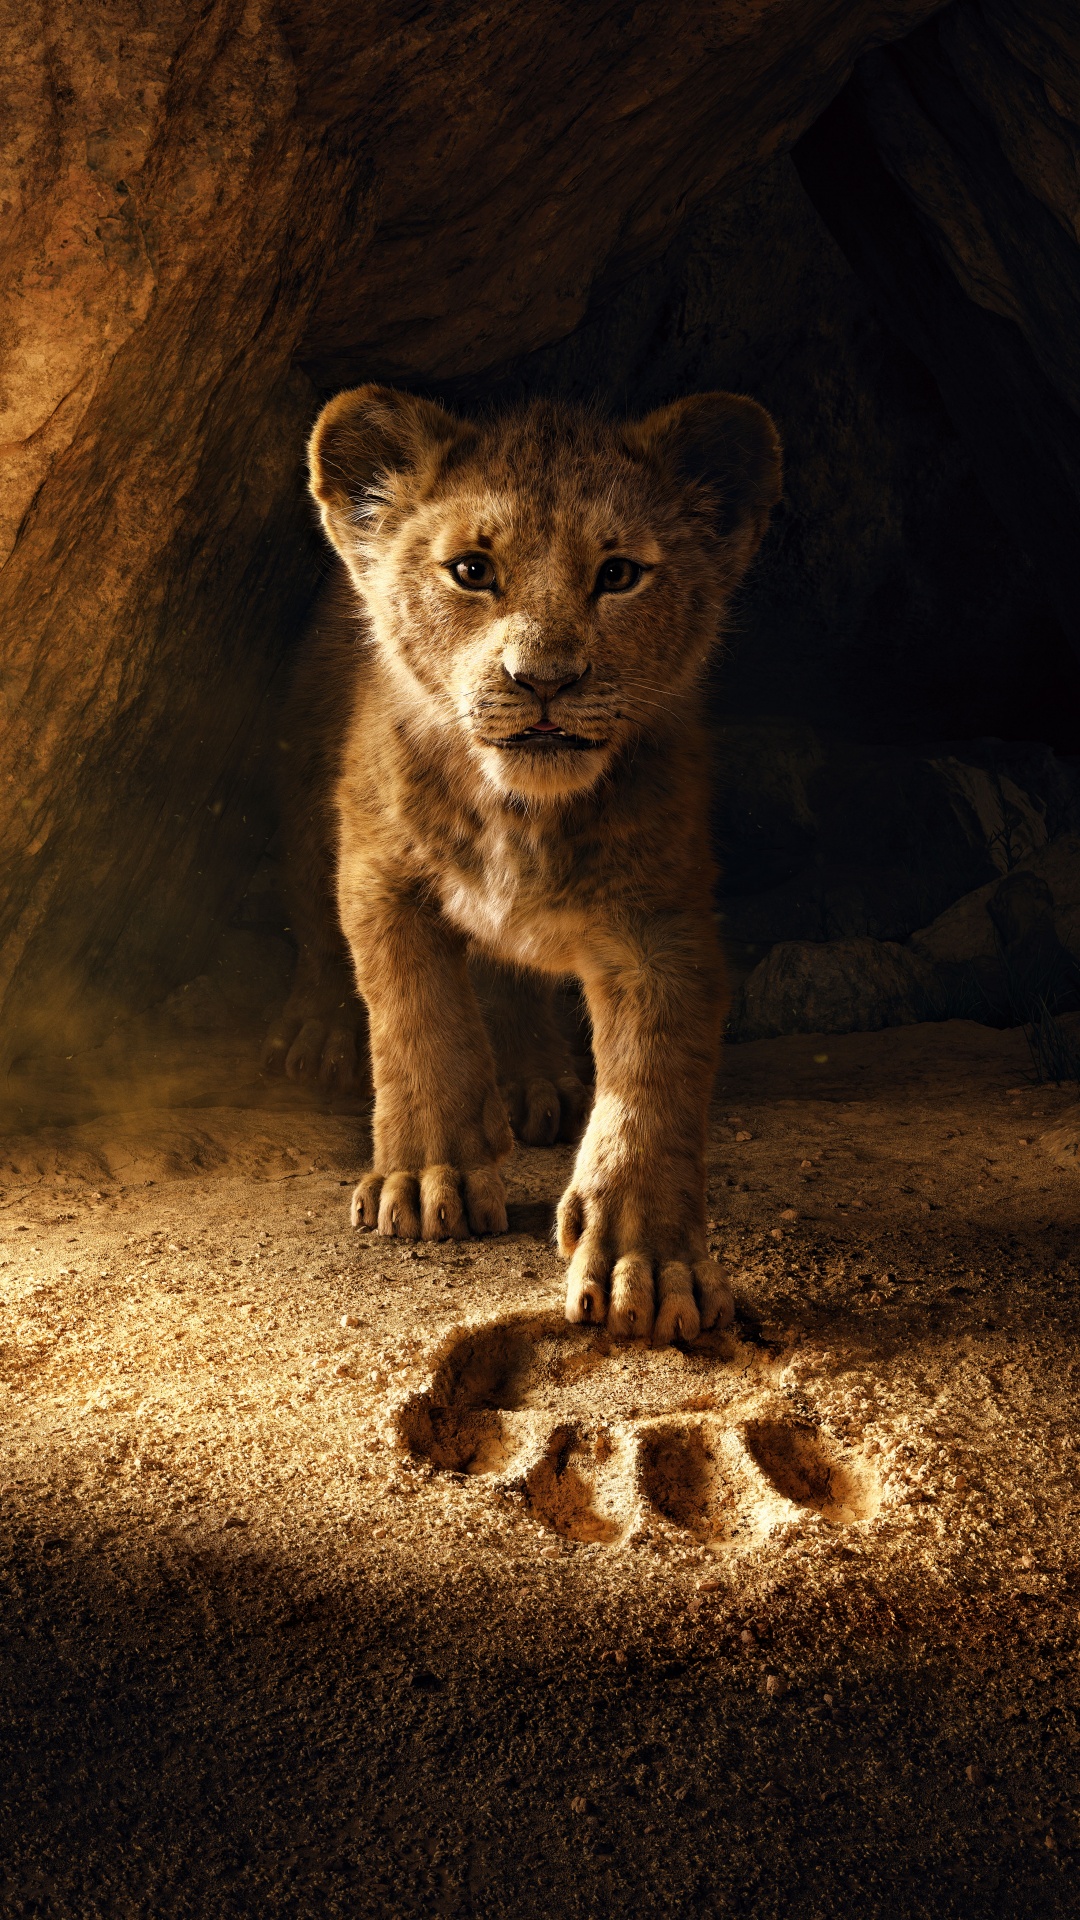 The Lion King 4K Wallpaper, Simba, Lion cub, 5K, Movies, #944